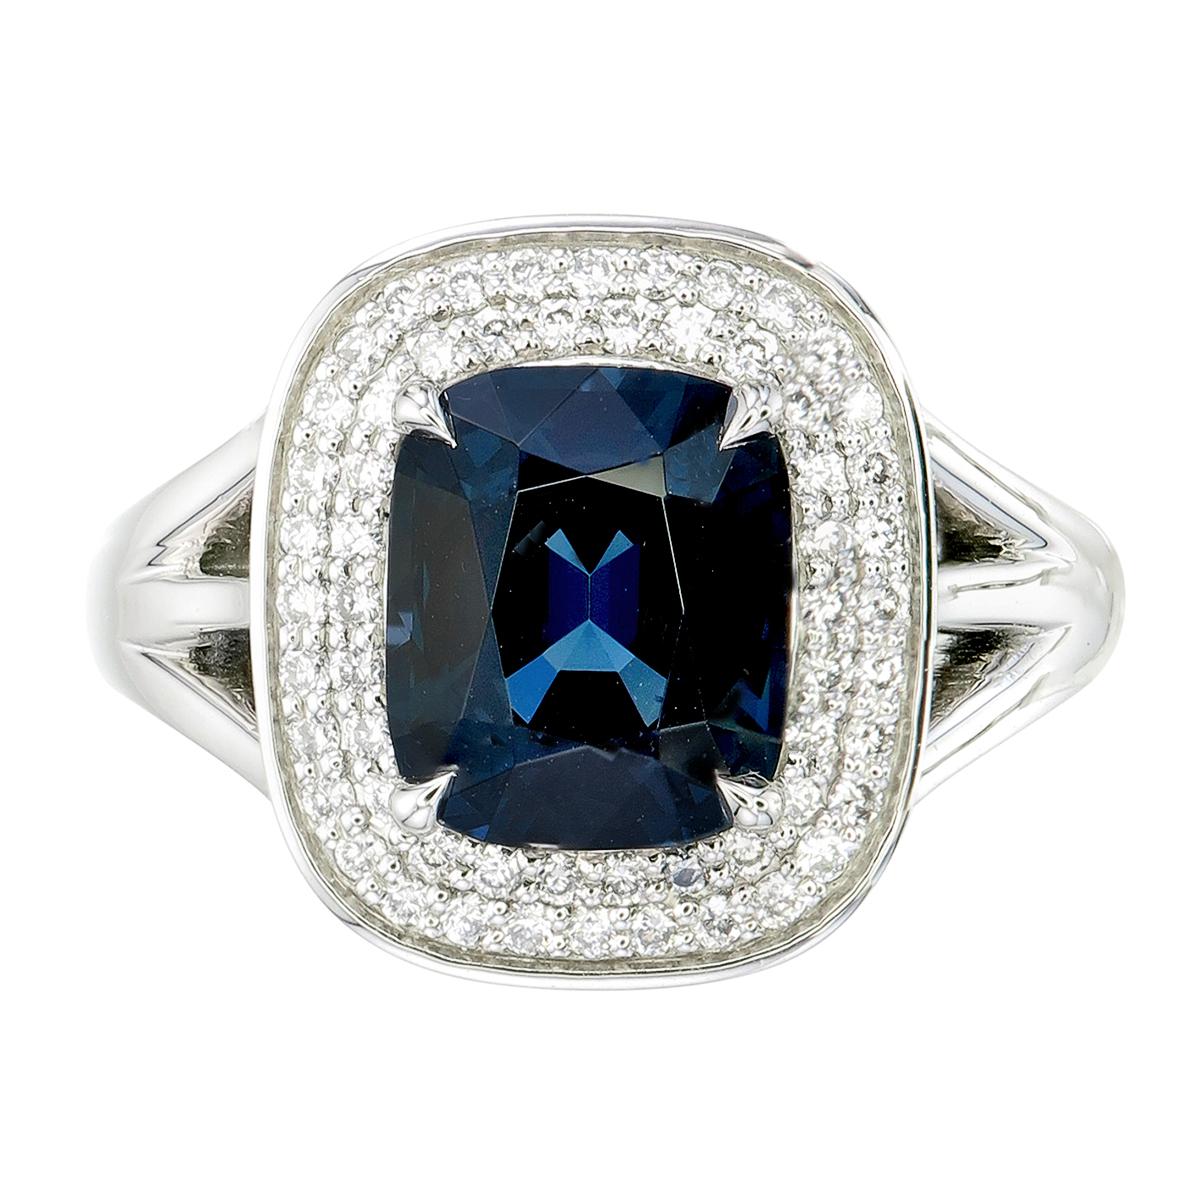 Platinum ring set with a 2.69 carat Blue Cobalt Spinel & 58pcs. Diamonds total 0.30 carat.
Ring Size: 6 US
Stone Dimesions: 8.92 x 7.45 x 5.05 mm
Stone weight: 2.69 carat
Stone origin: Burma ( Mynamar)
Shape: Cushion cut
No Heat
GIL cerified report